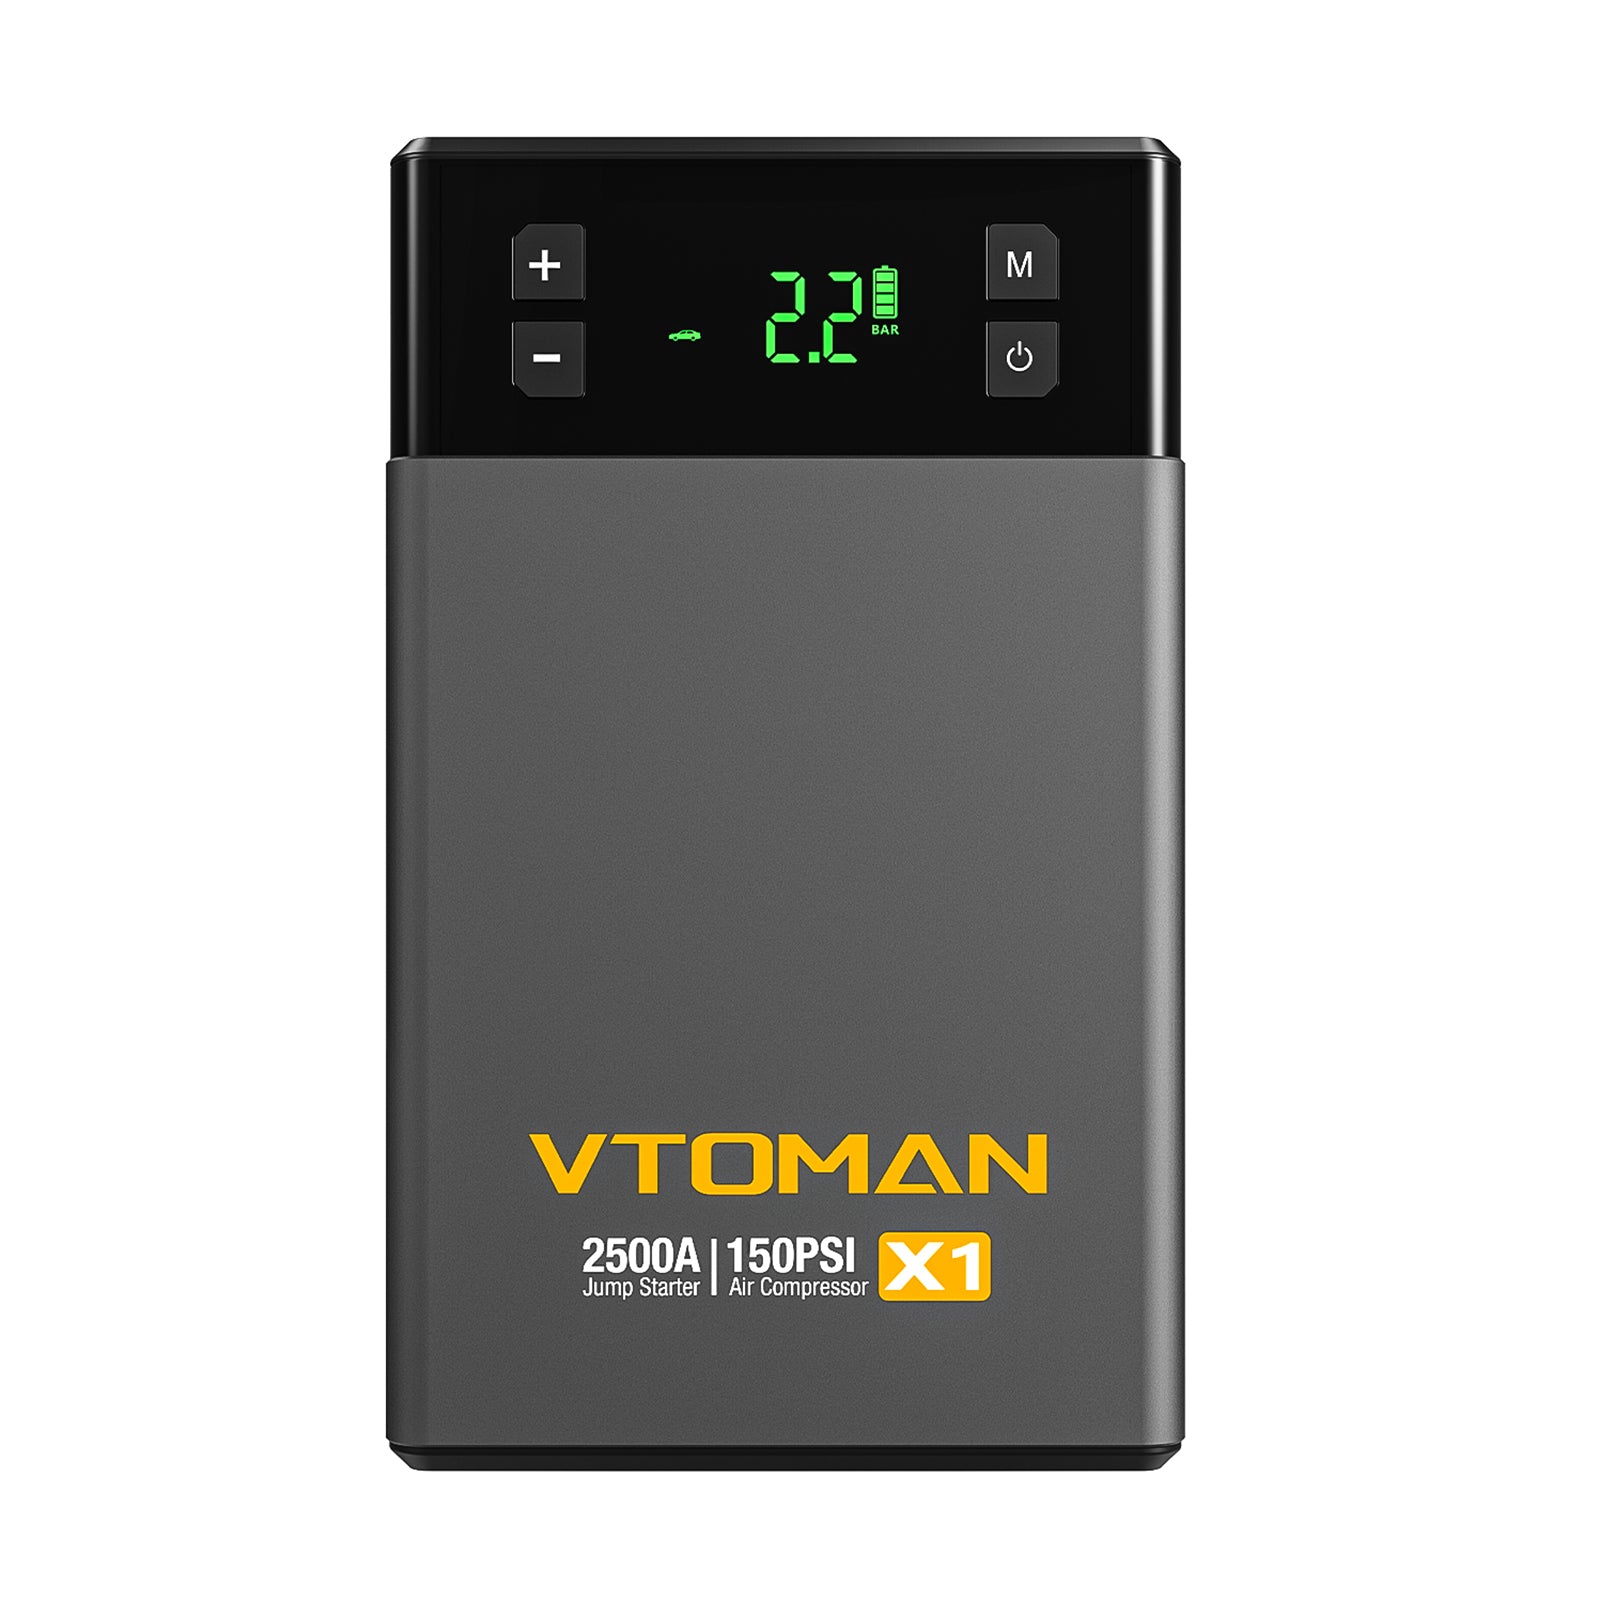 vtoman x1 jump starter-150PSI air compressor-2500A peak current